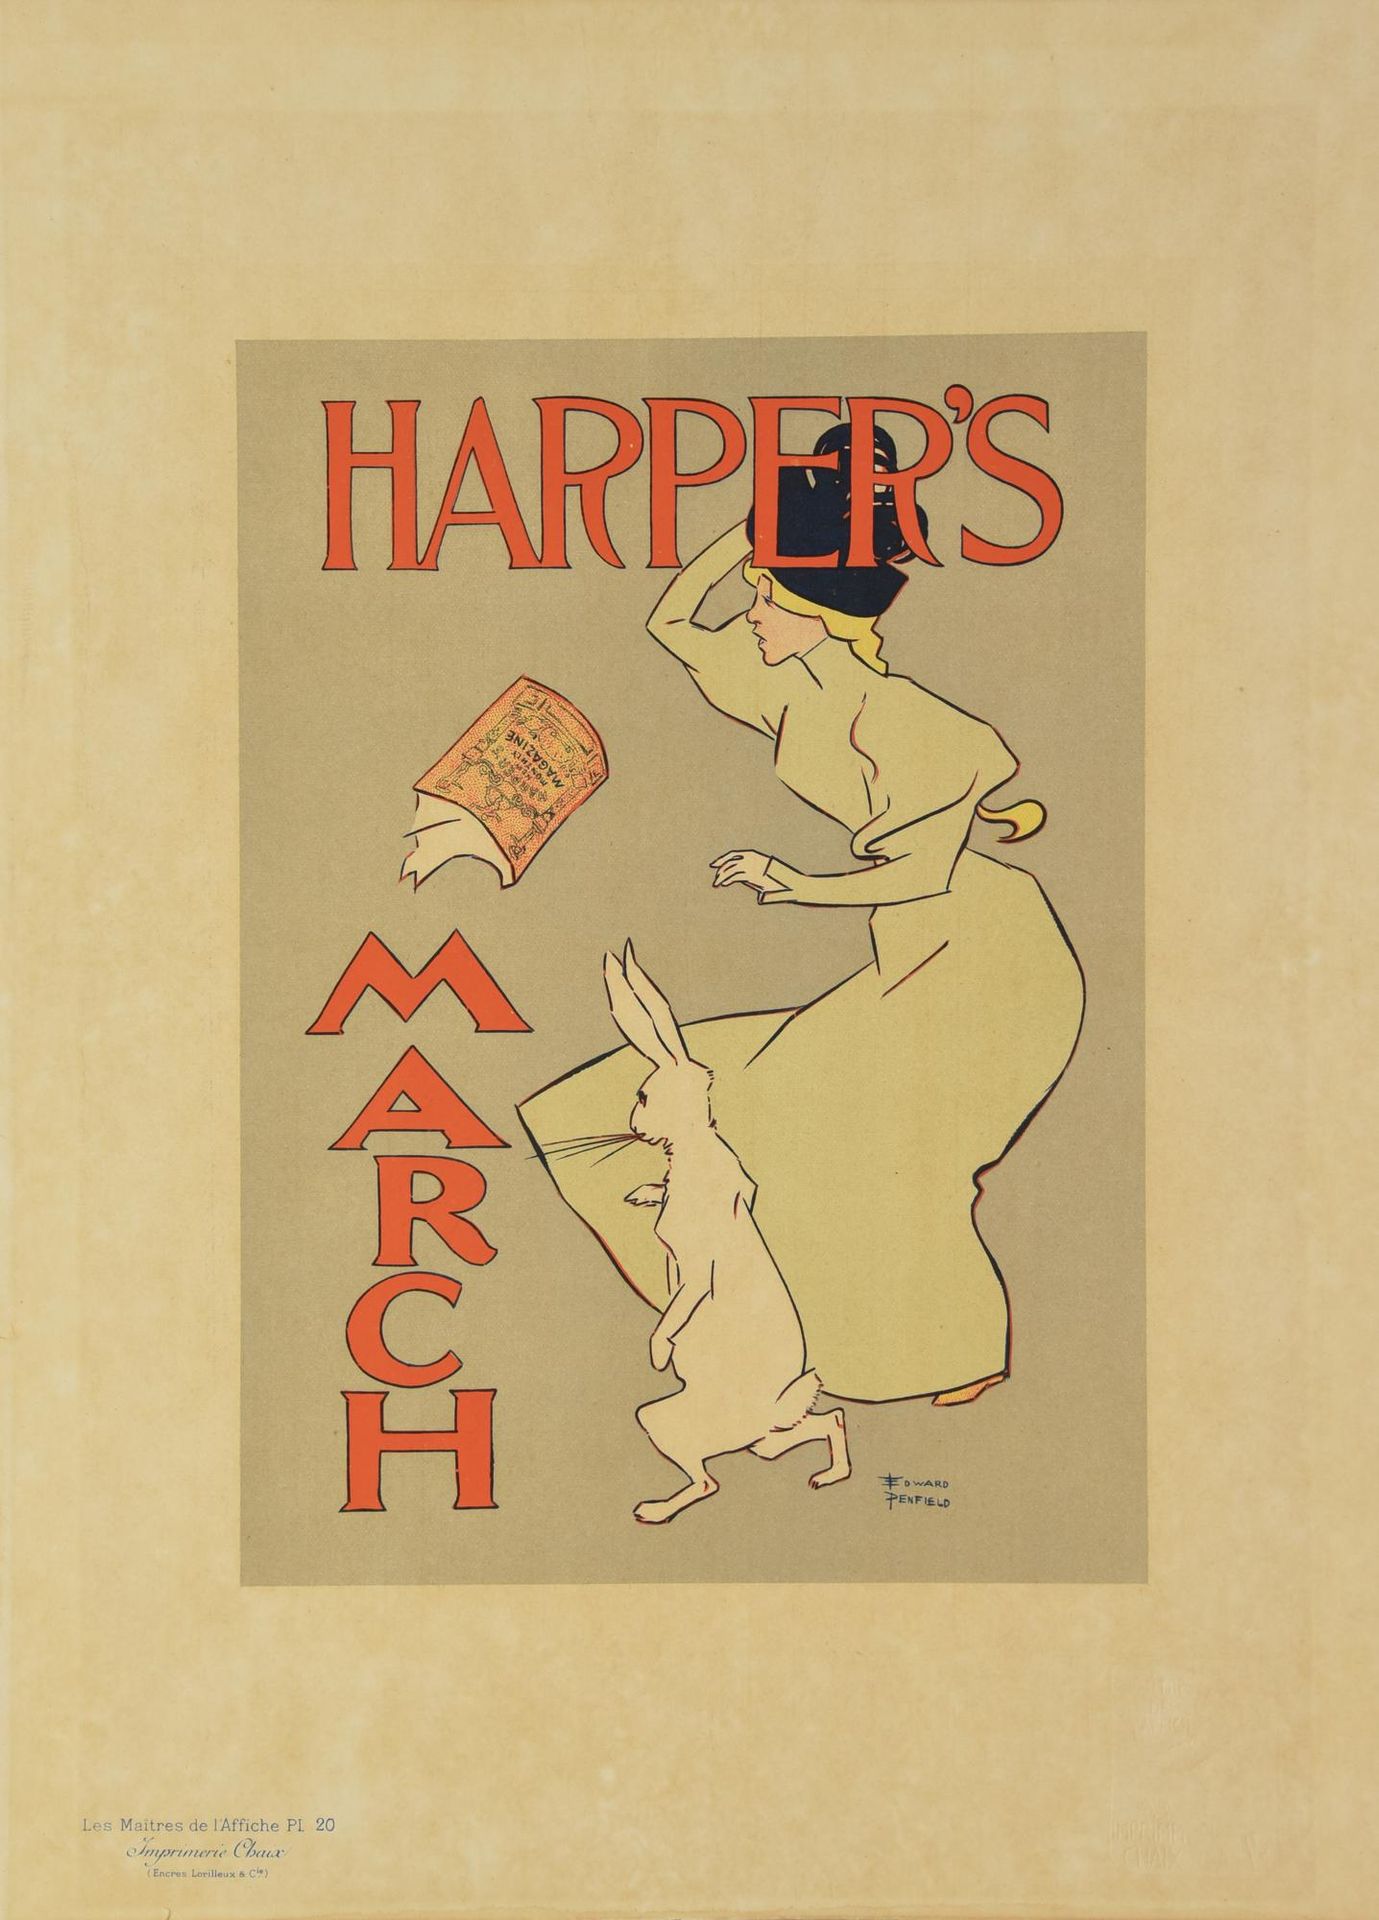 HARPER'S MARCH HARPER'S MARCH

石版画，39.5x29厘米

浮雕邮票Imprimerie Chaix，巴黎

来自 "Les M&hellip;